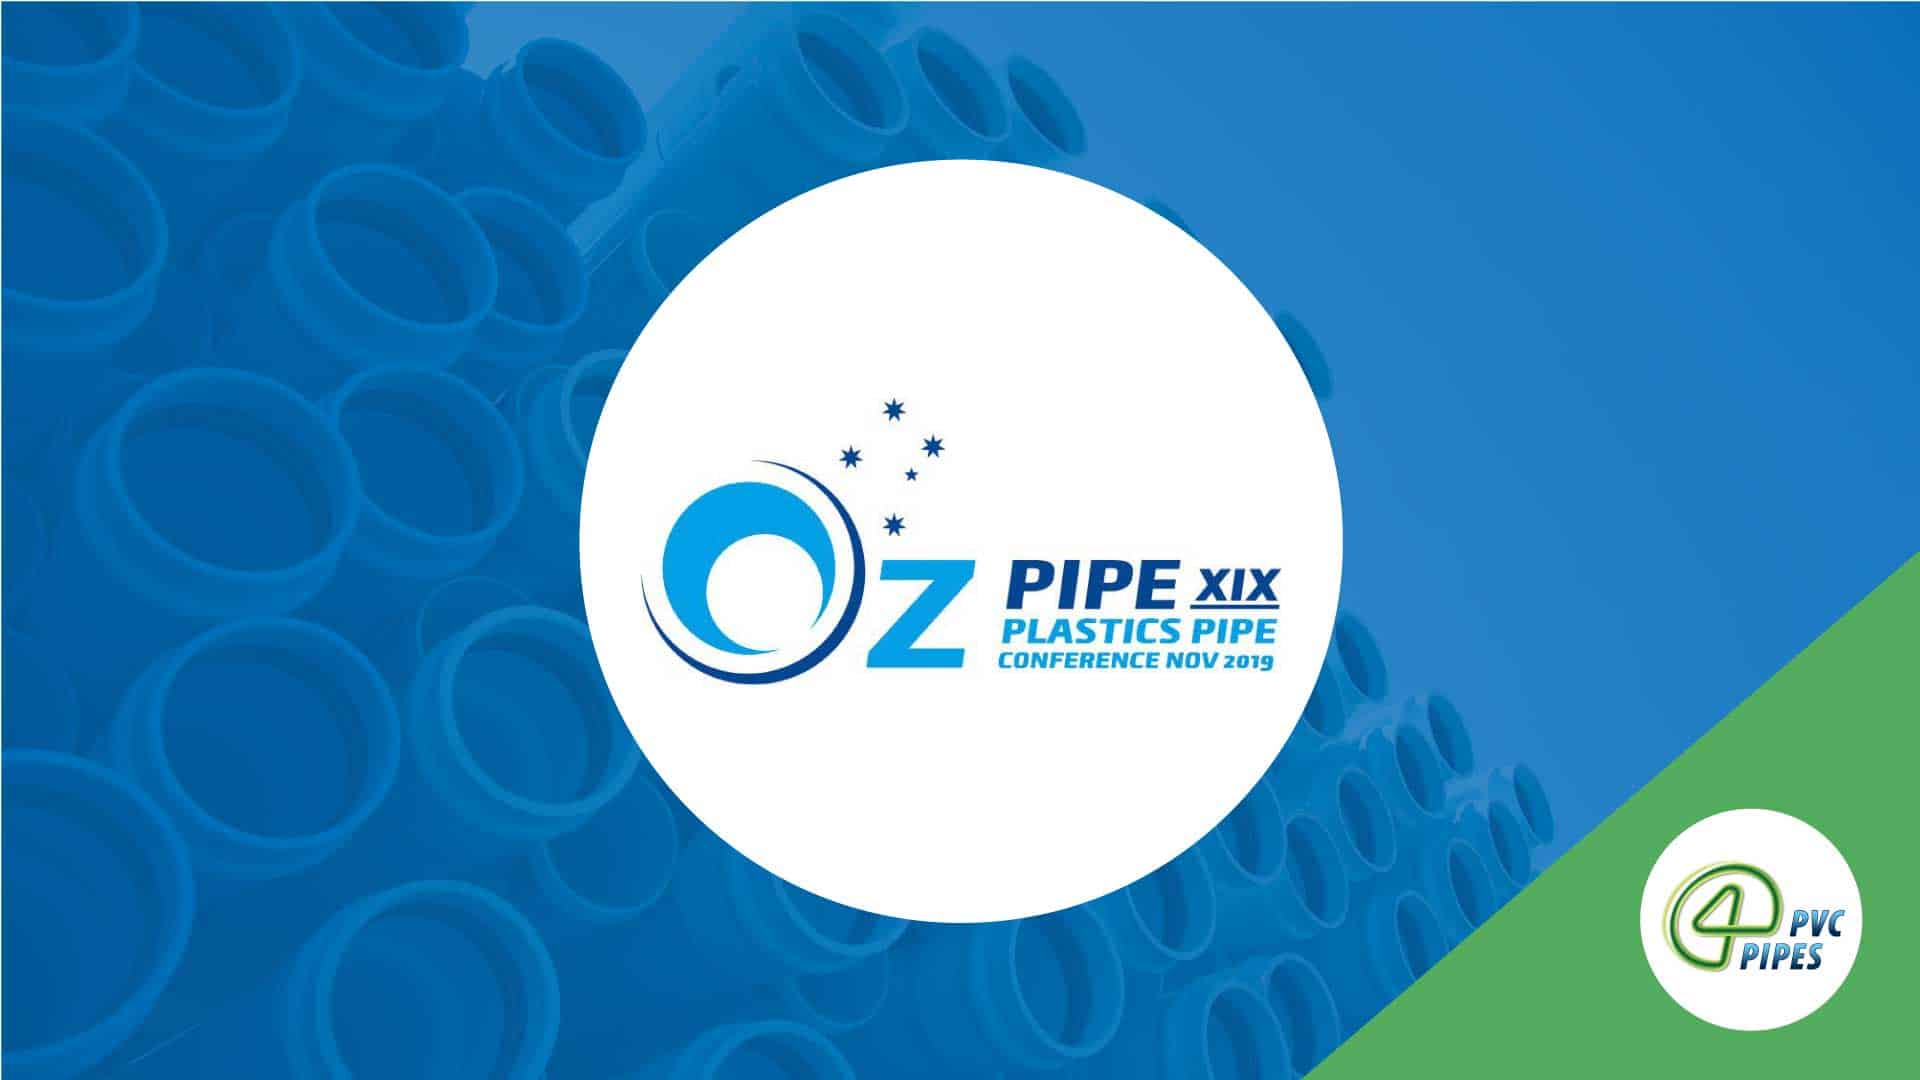 oz pipe plastic conference